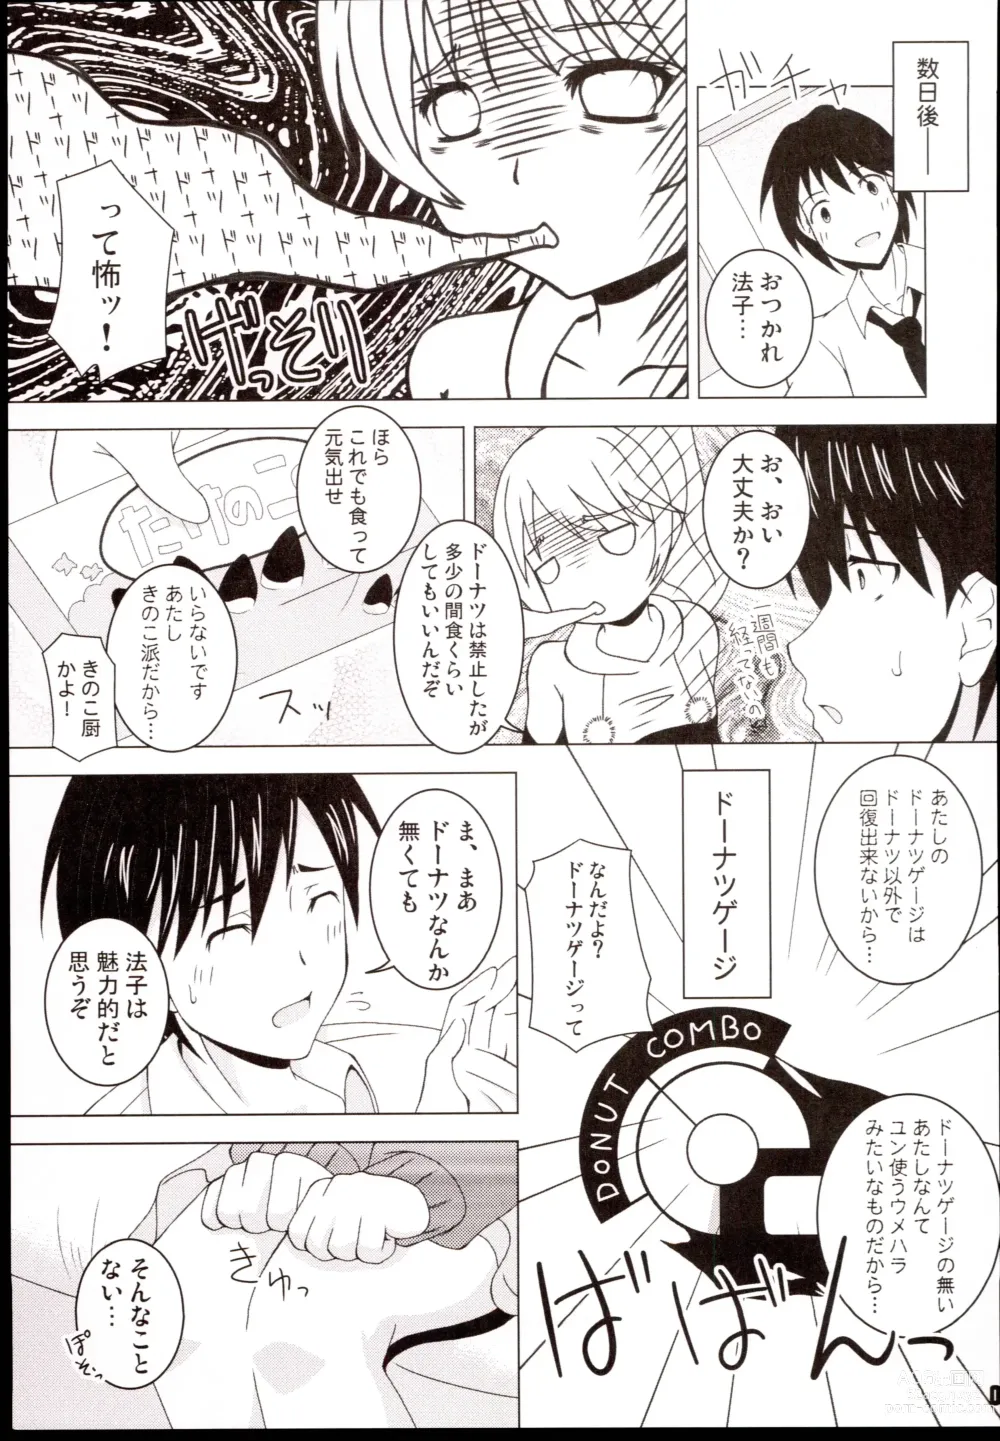 Page 9 of doujinshi Sweetx2 DonutS!